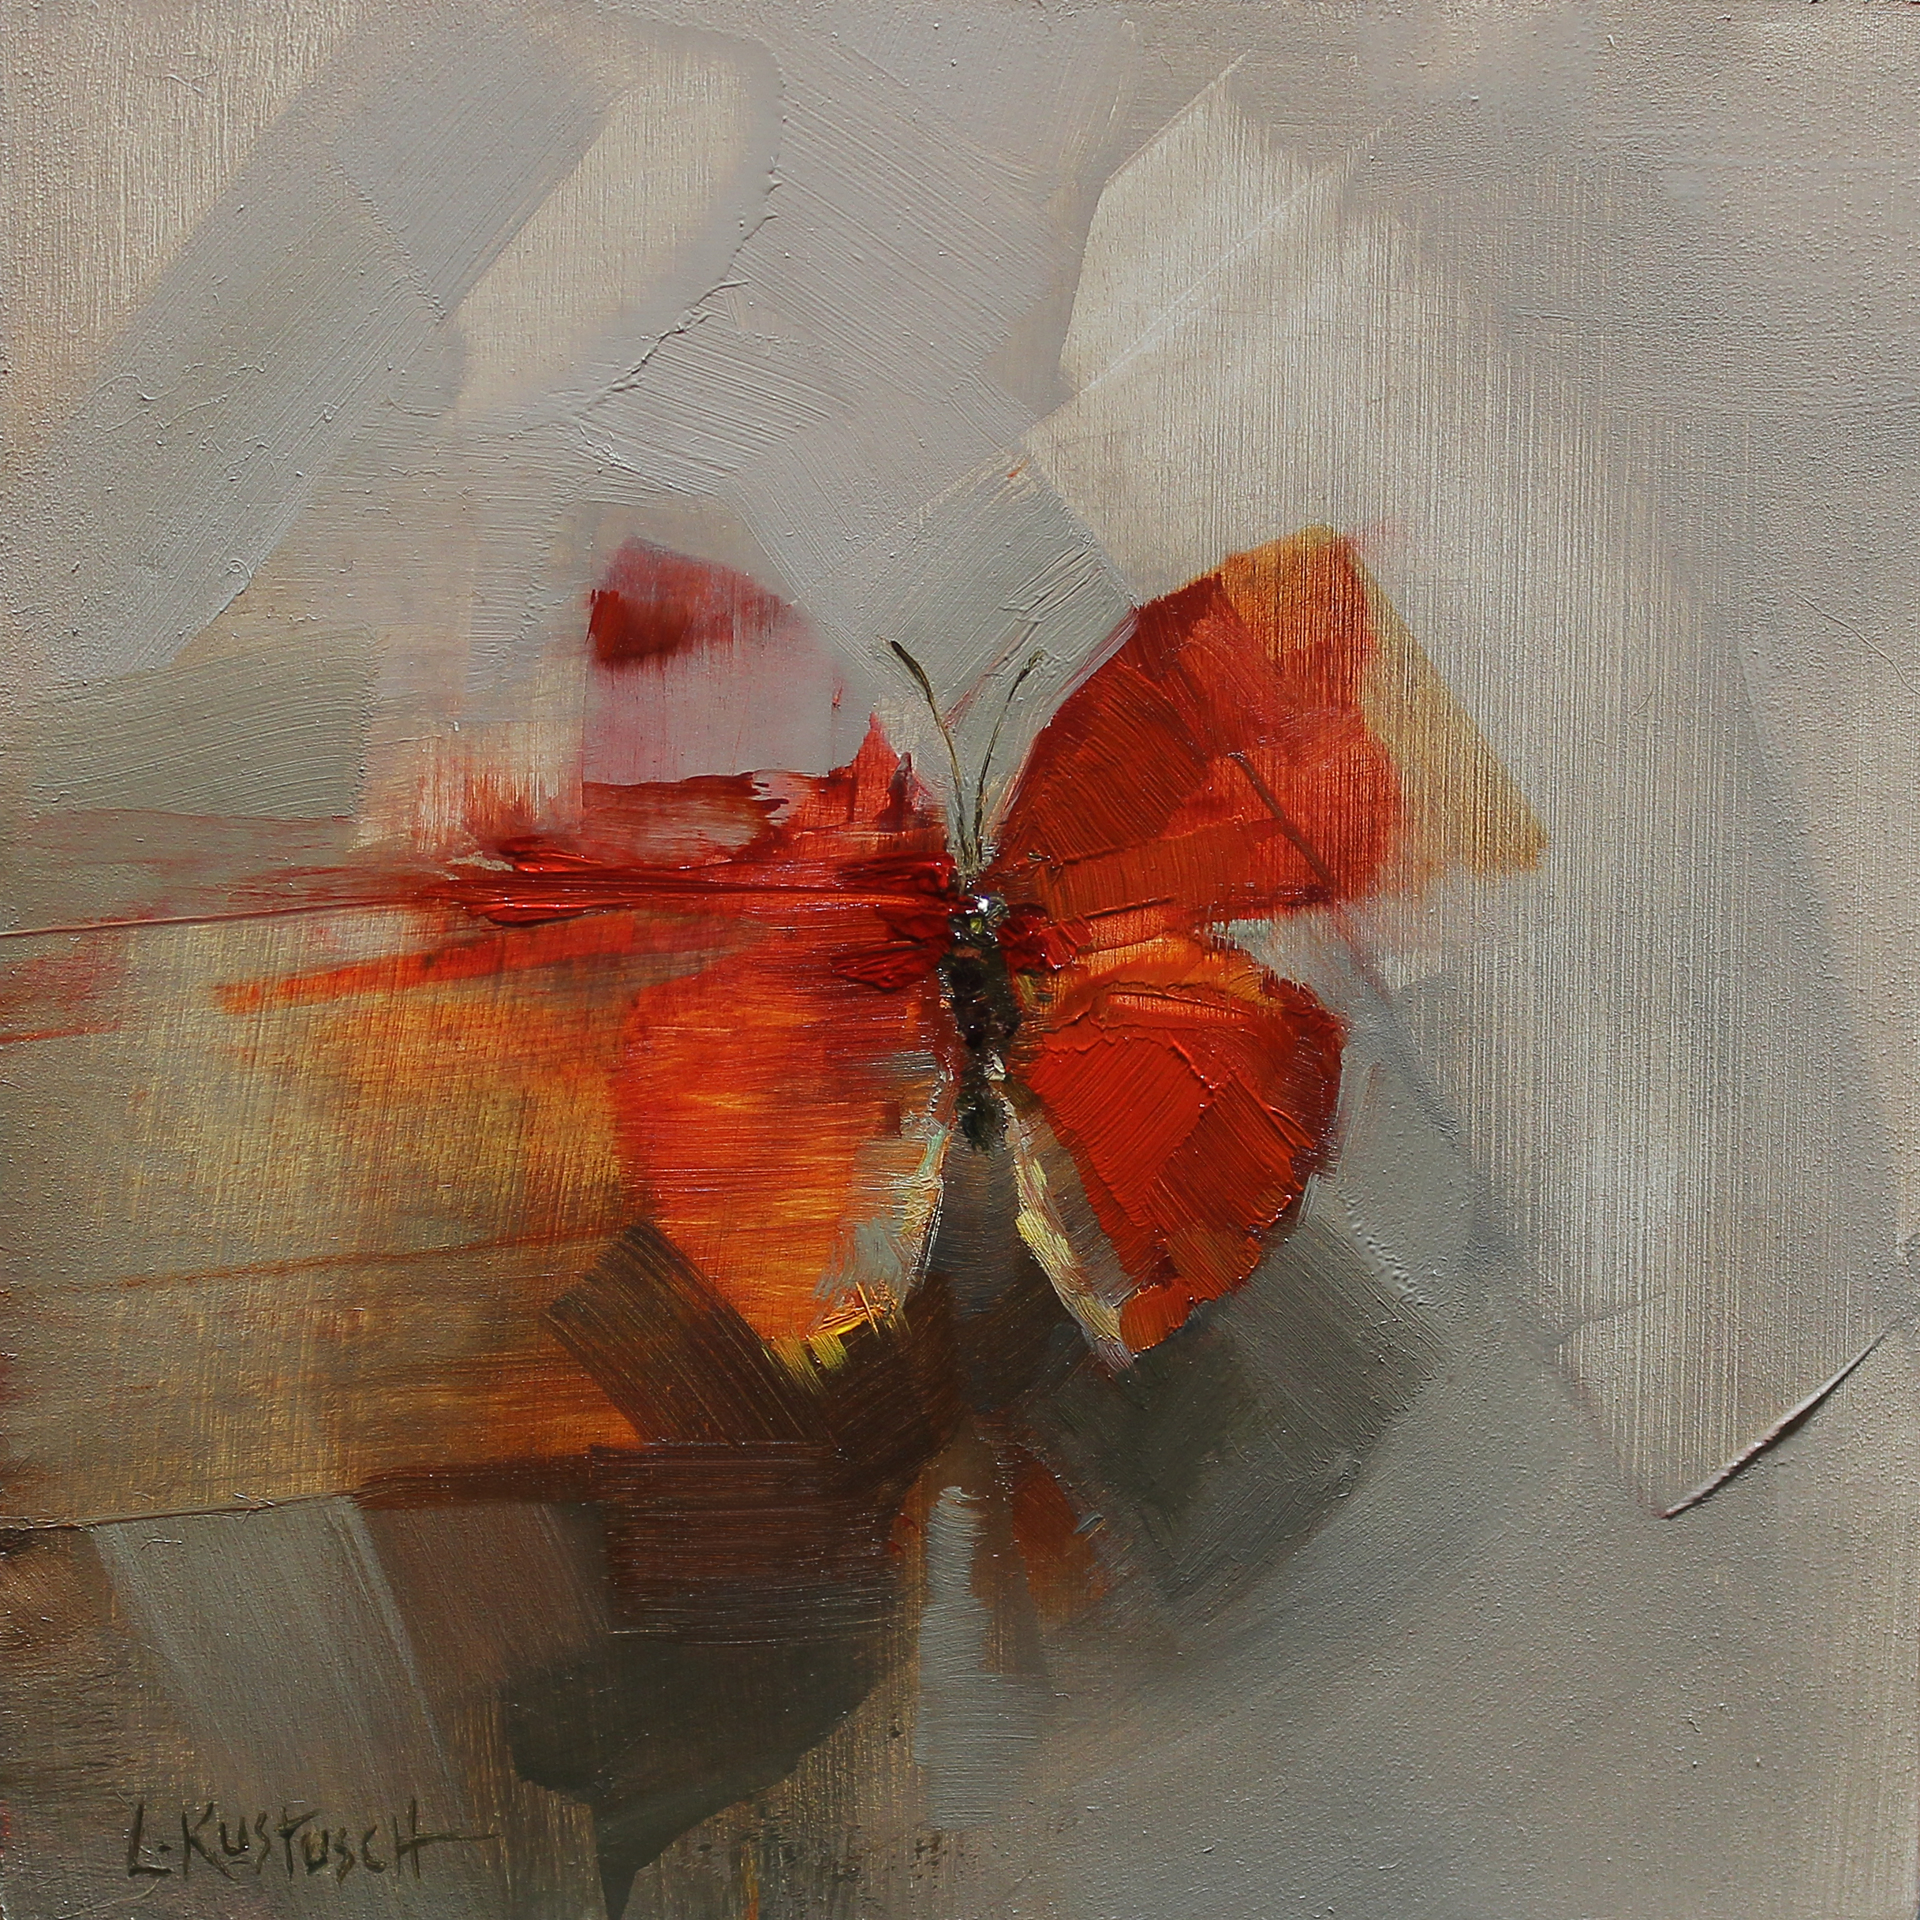 The Red Glider by Lindsey Kustusch